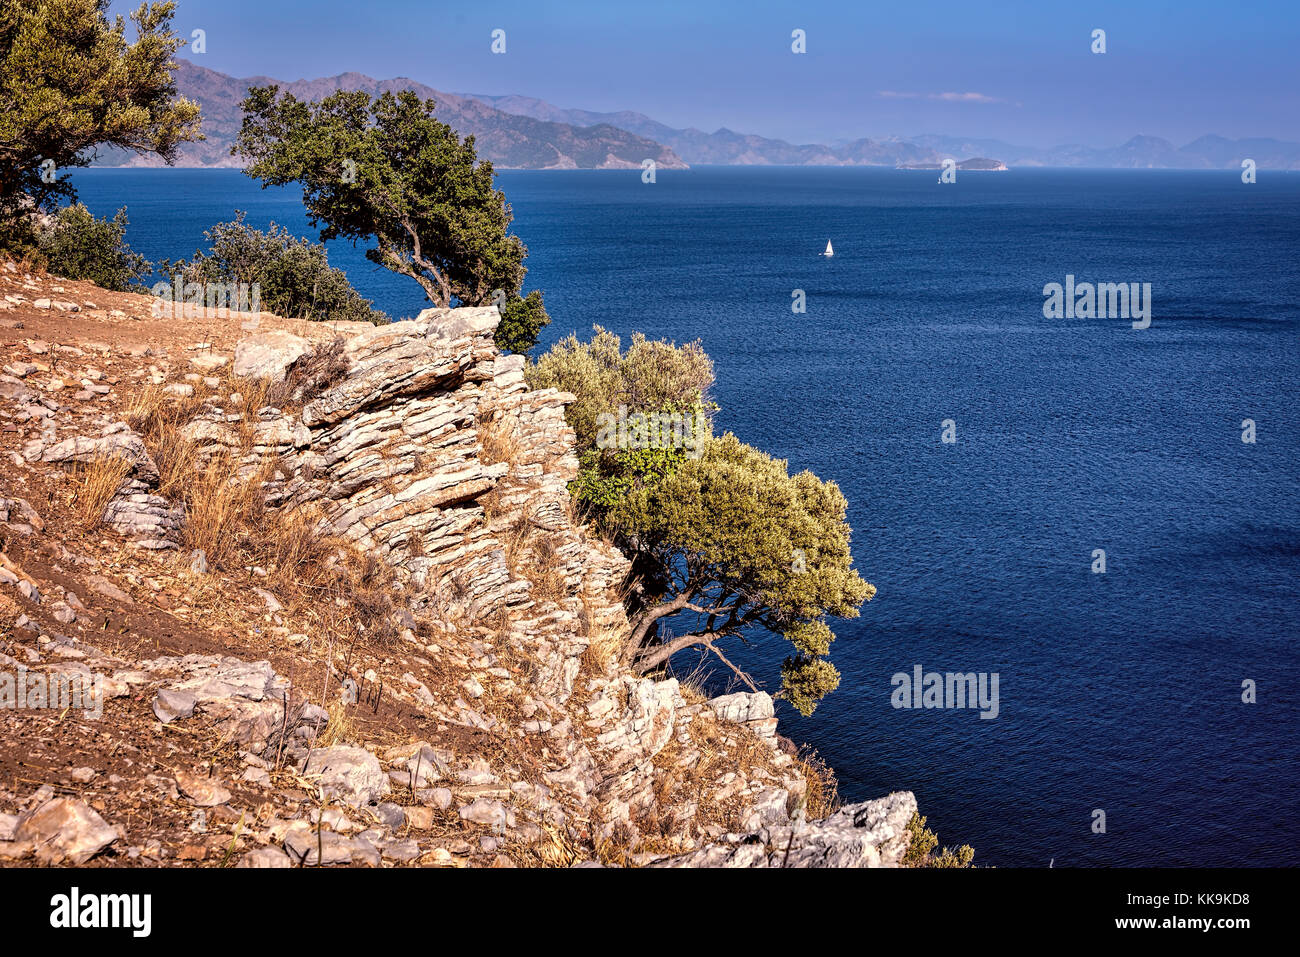 Agean vista from Amos Antique City, Turunc, Bozburun peninsula under clear blue skies, Turunc area, Marmaris, Mugla, Turkey Stock Photo